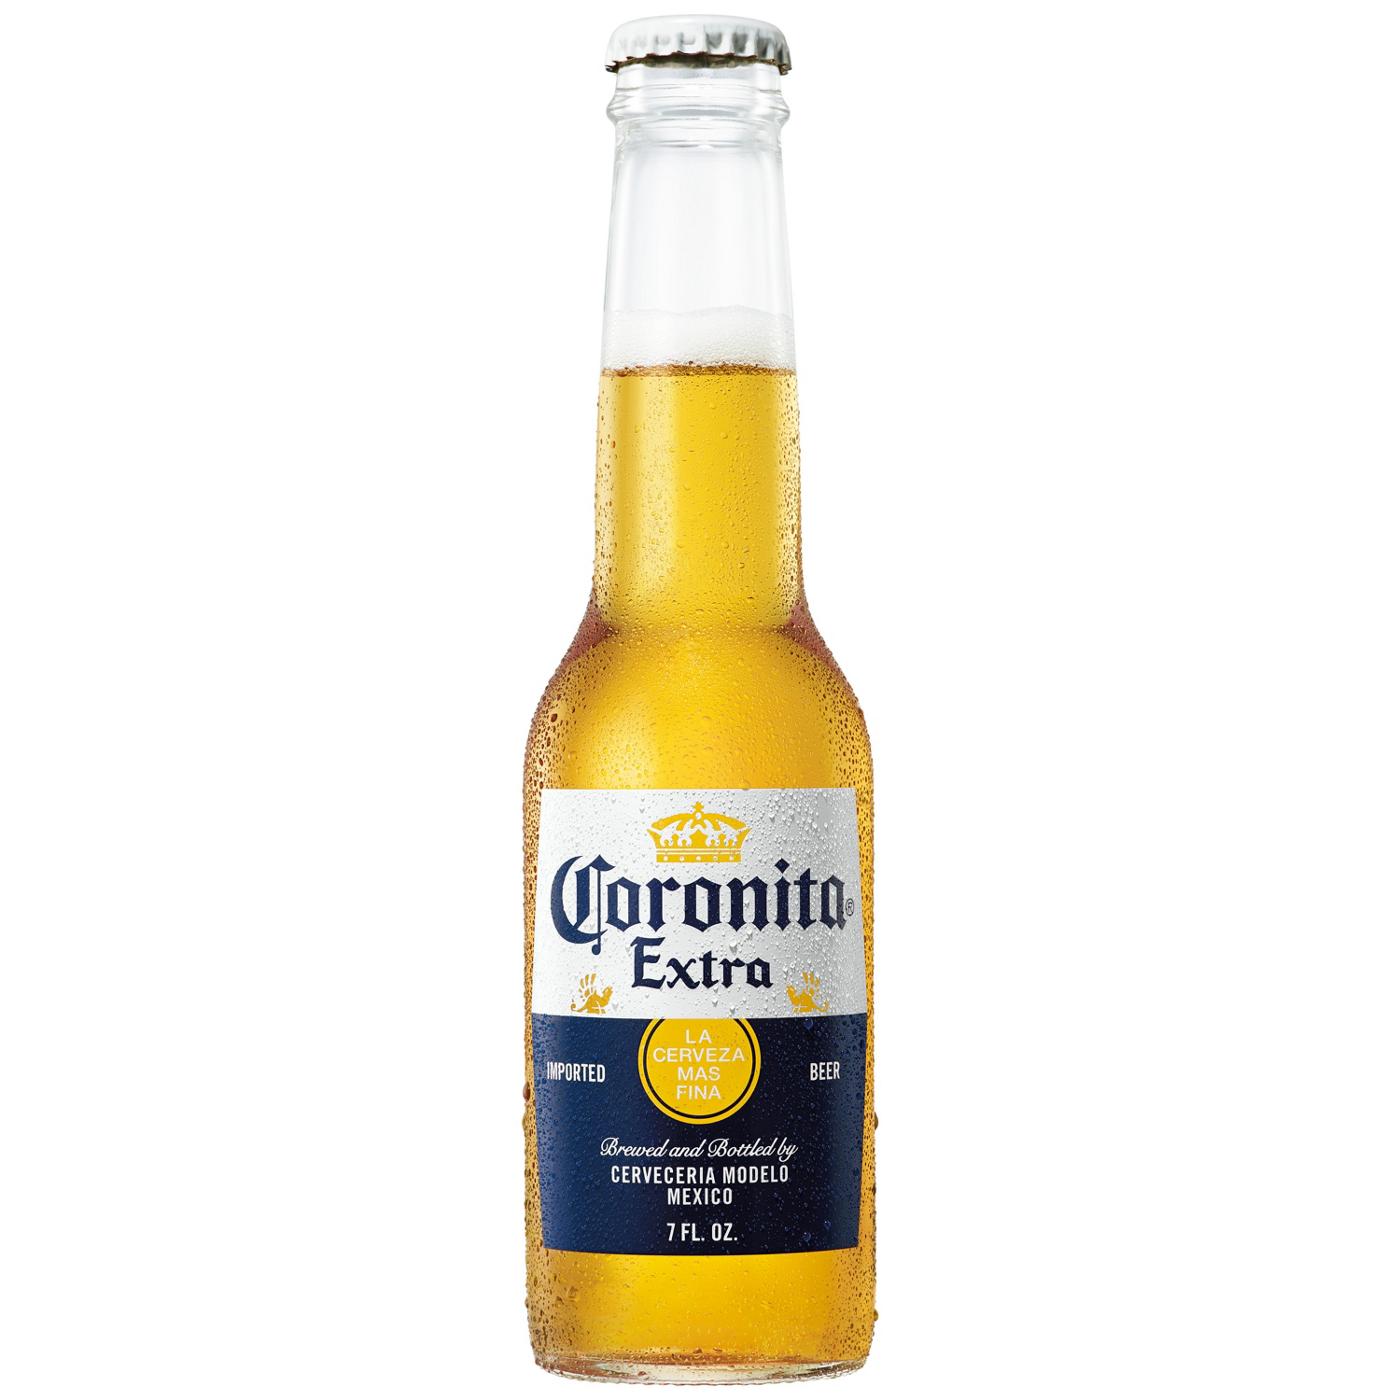 Corona Extra Coronita Lager Mexican Beer 6 pk Bottles; image 8 of 11